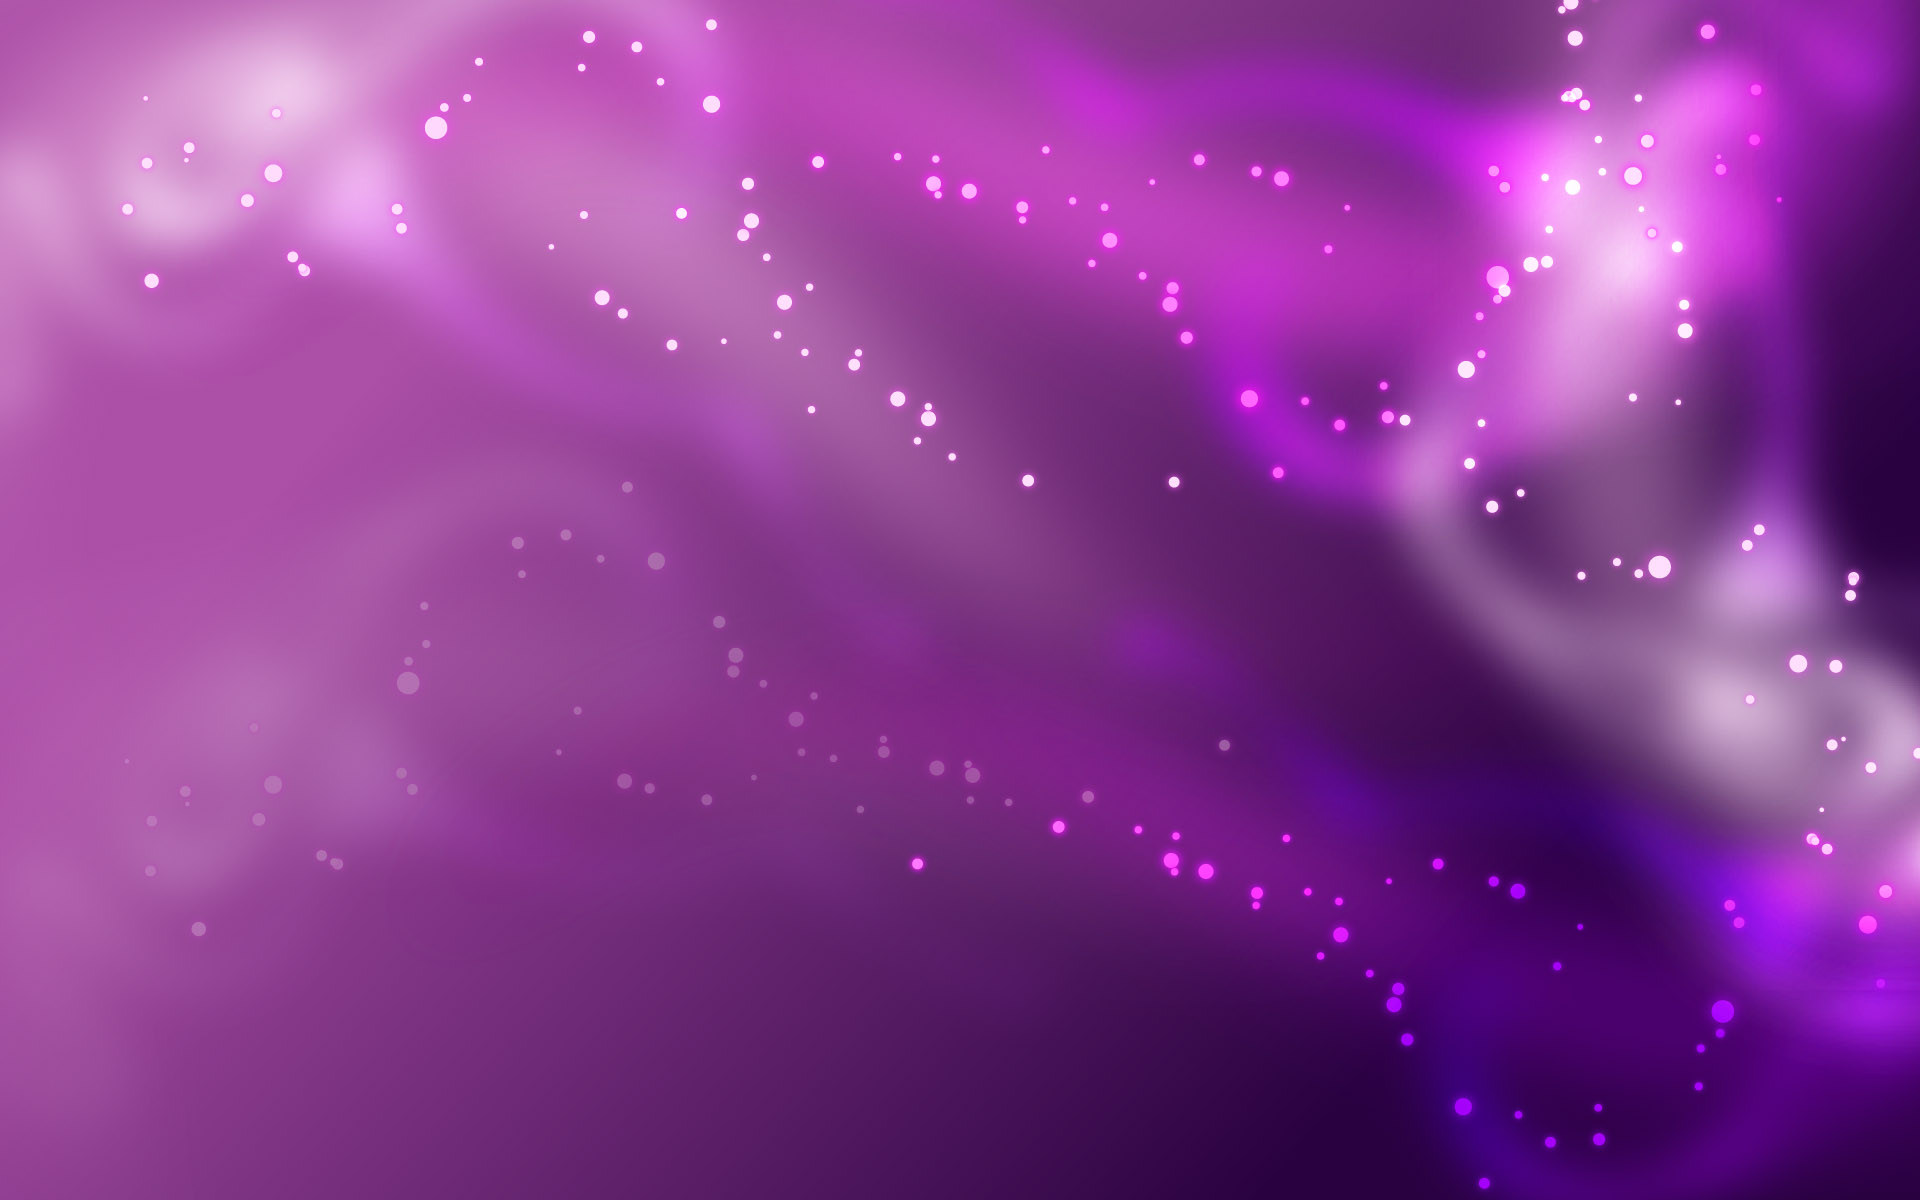 high quality purple image